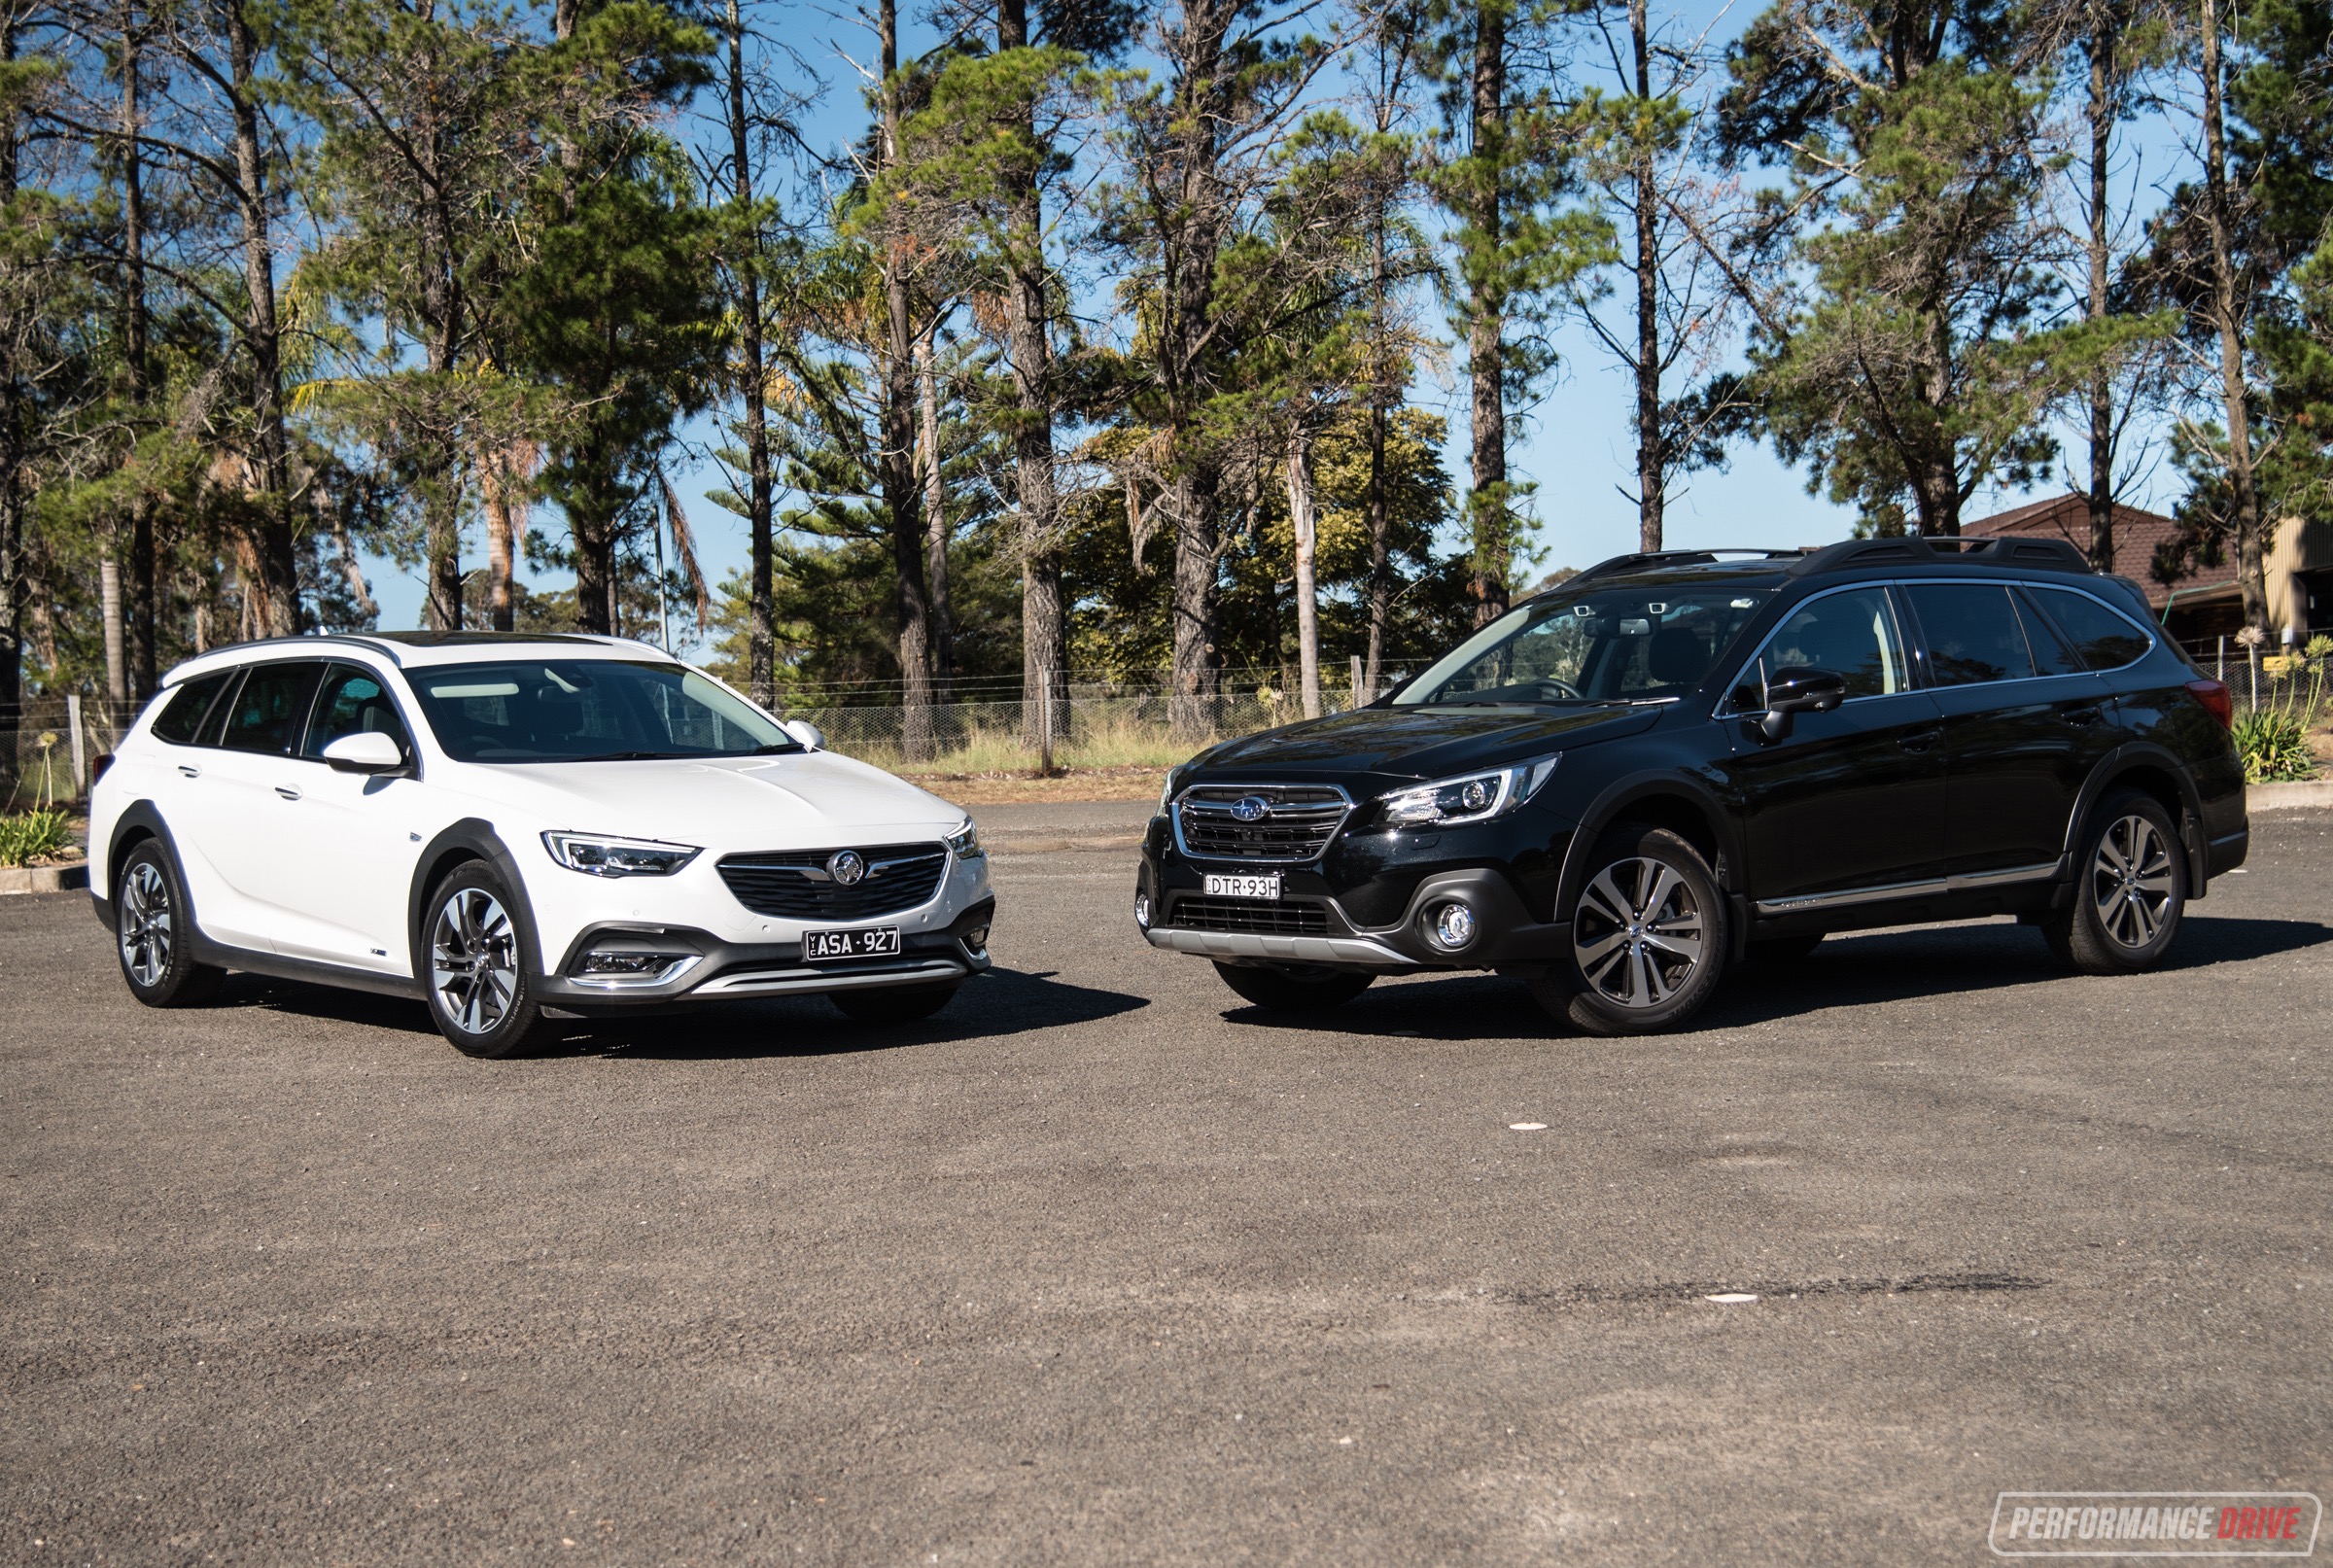 2018 Holden Calais Tourer vs Subaru Outback 3.6R: Adventure wagon comparison (video)